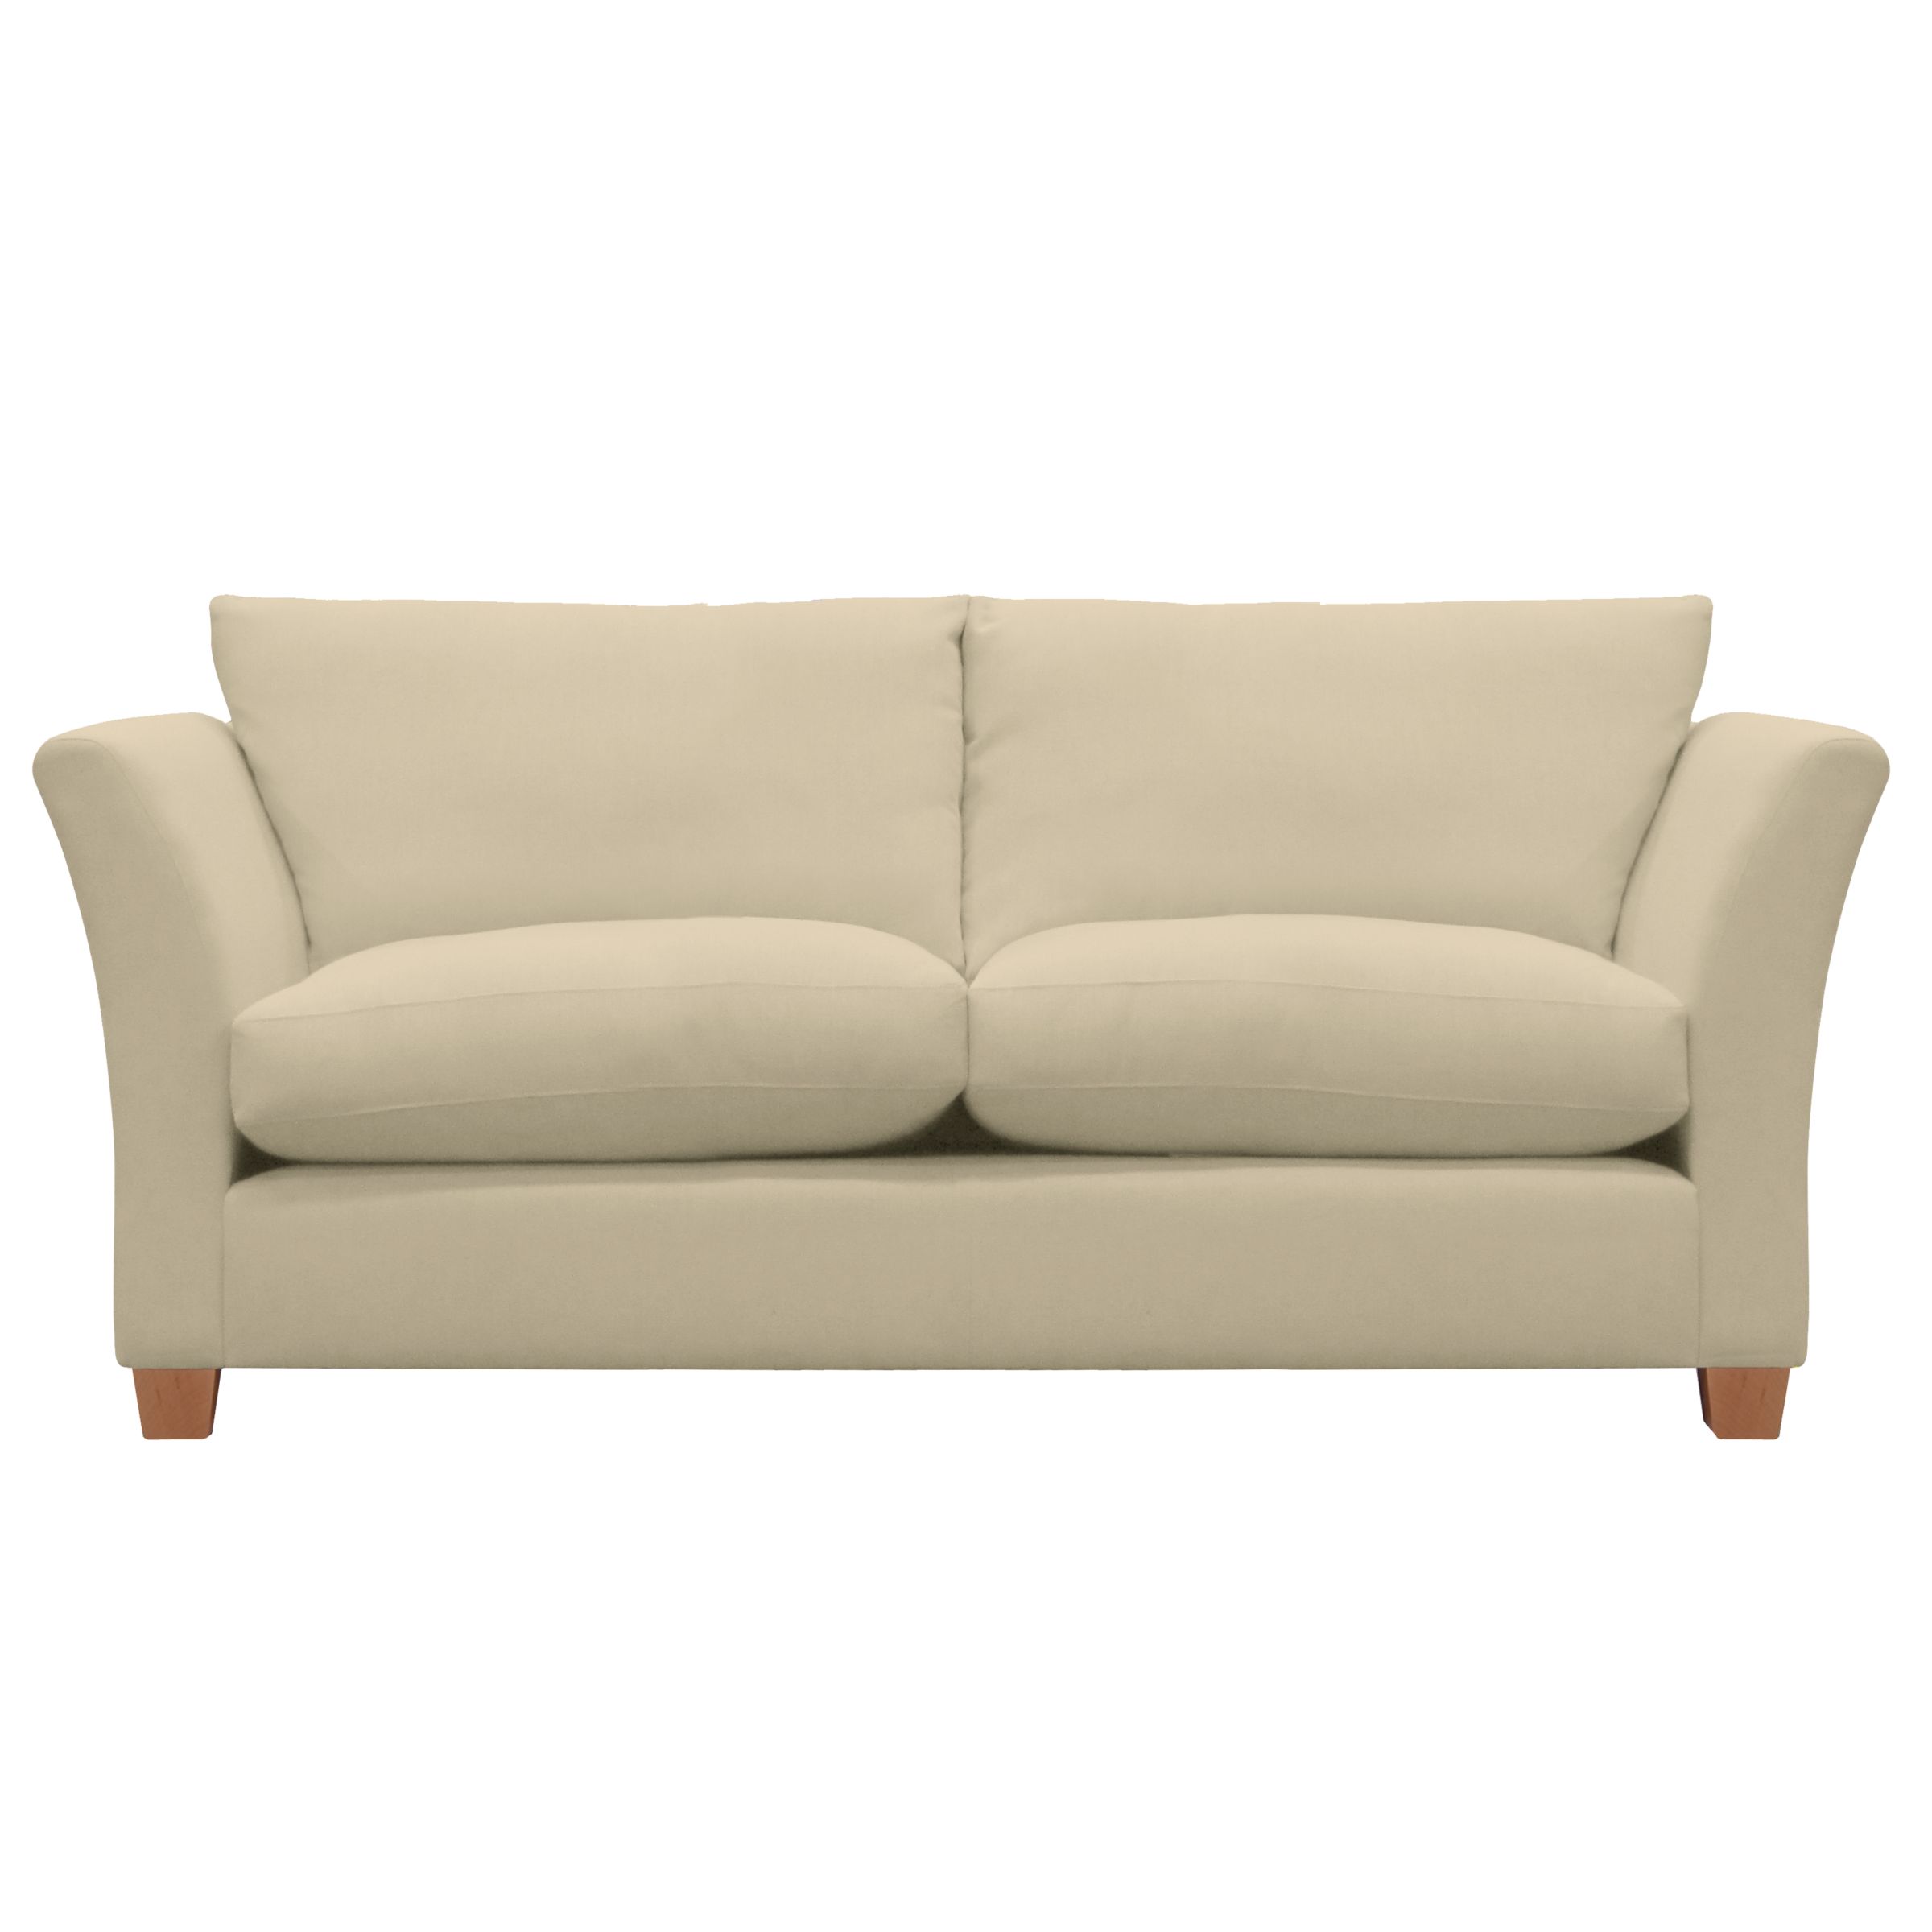 John Lewis Options Flare Arm Large Sofa, Eaton Taupe, width 200cm